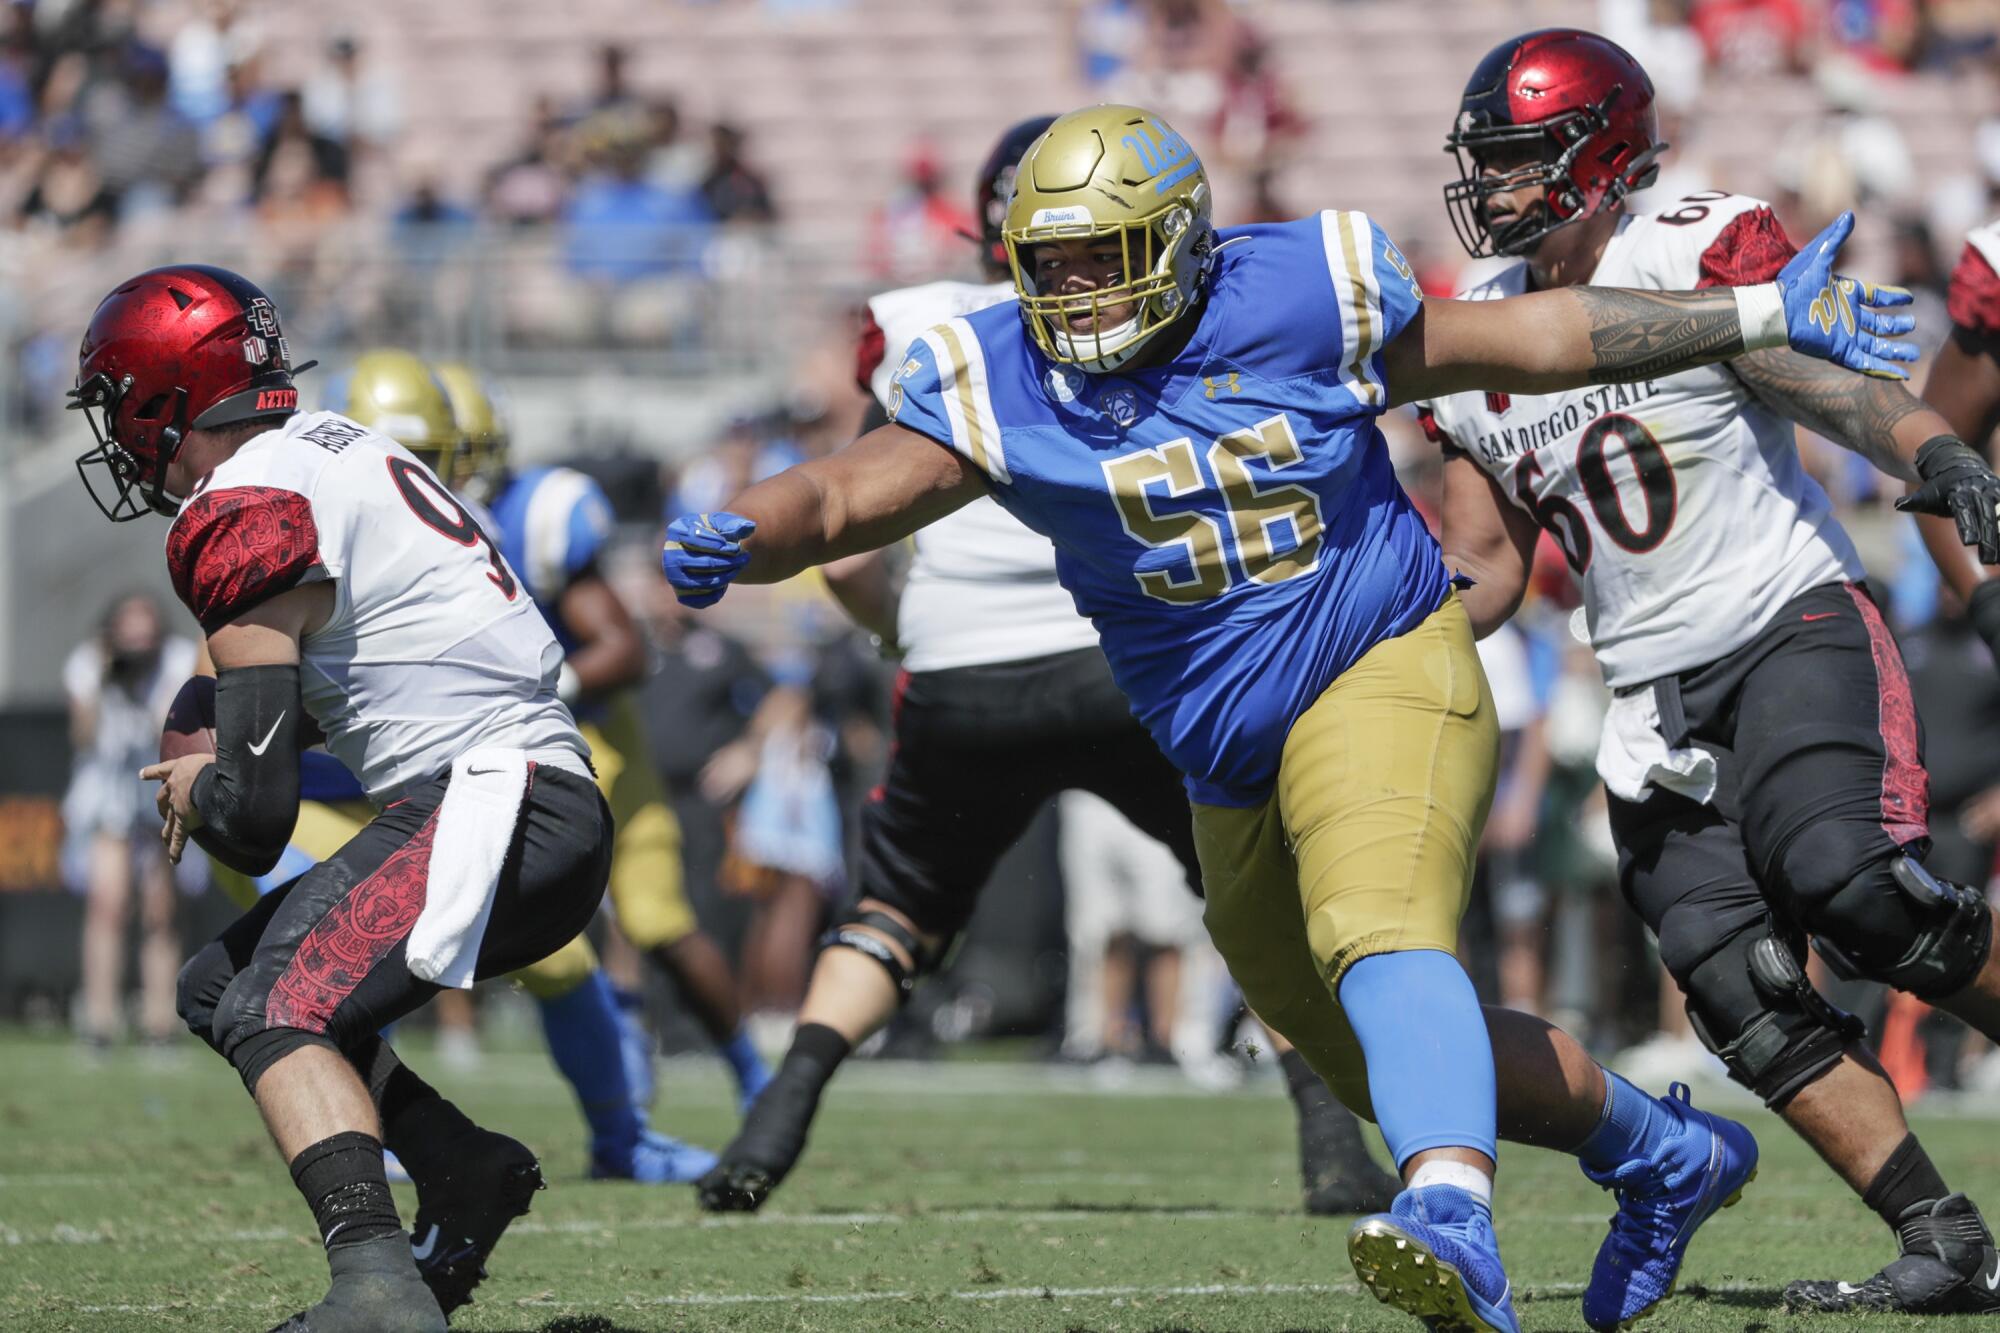 UCLA’S Atonio Mafi leans forward and runs during a game